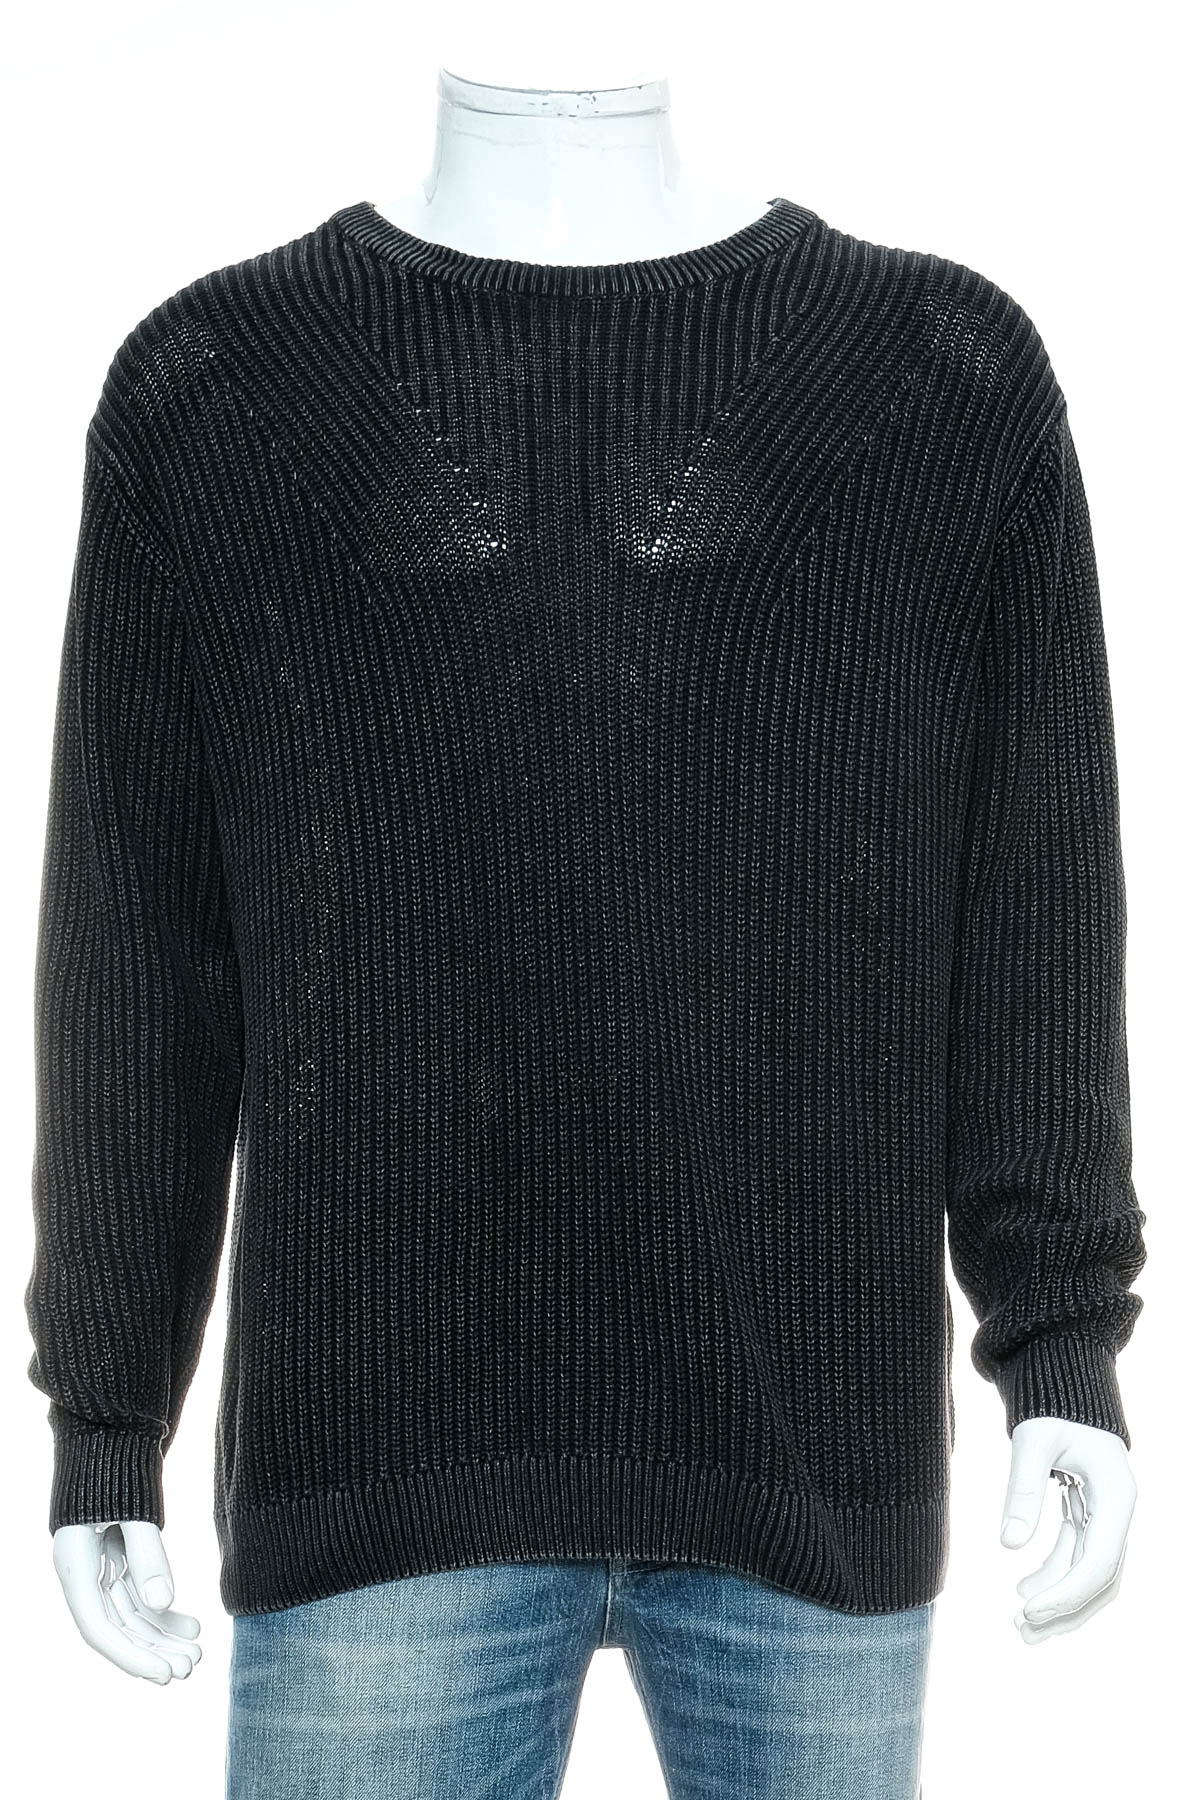 Men's sweater - Pull & Bear - 0